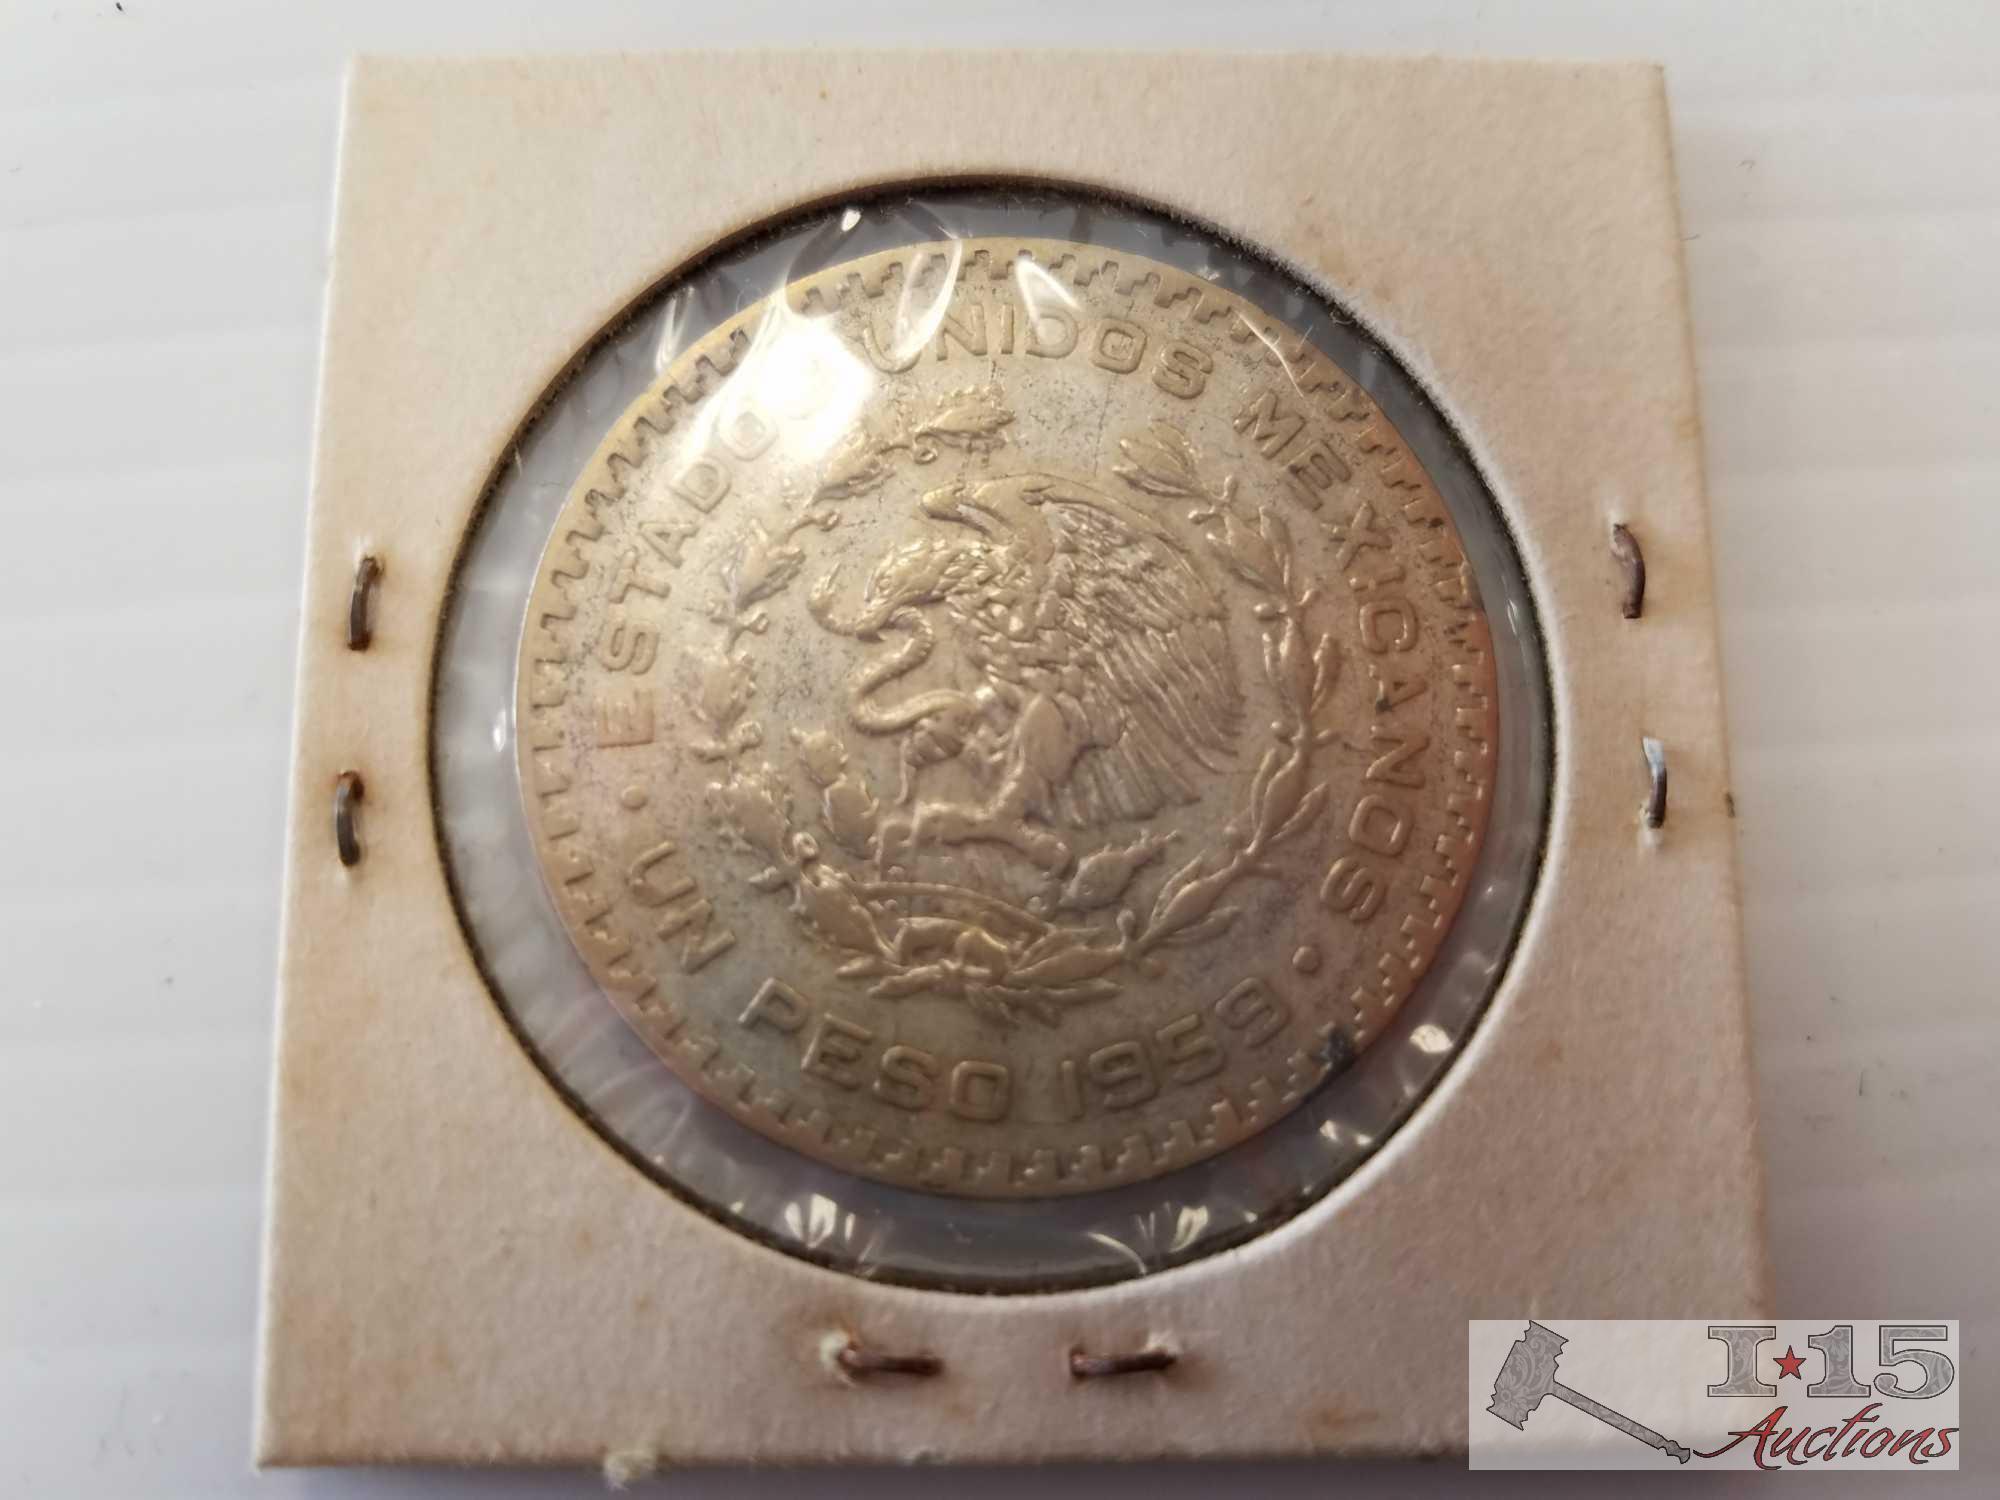 Mexican coin collection - some silver